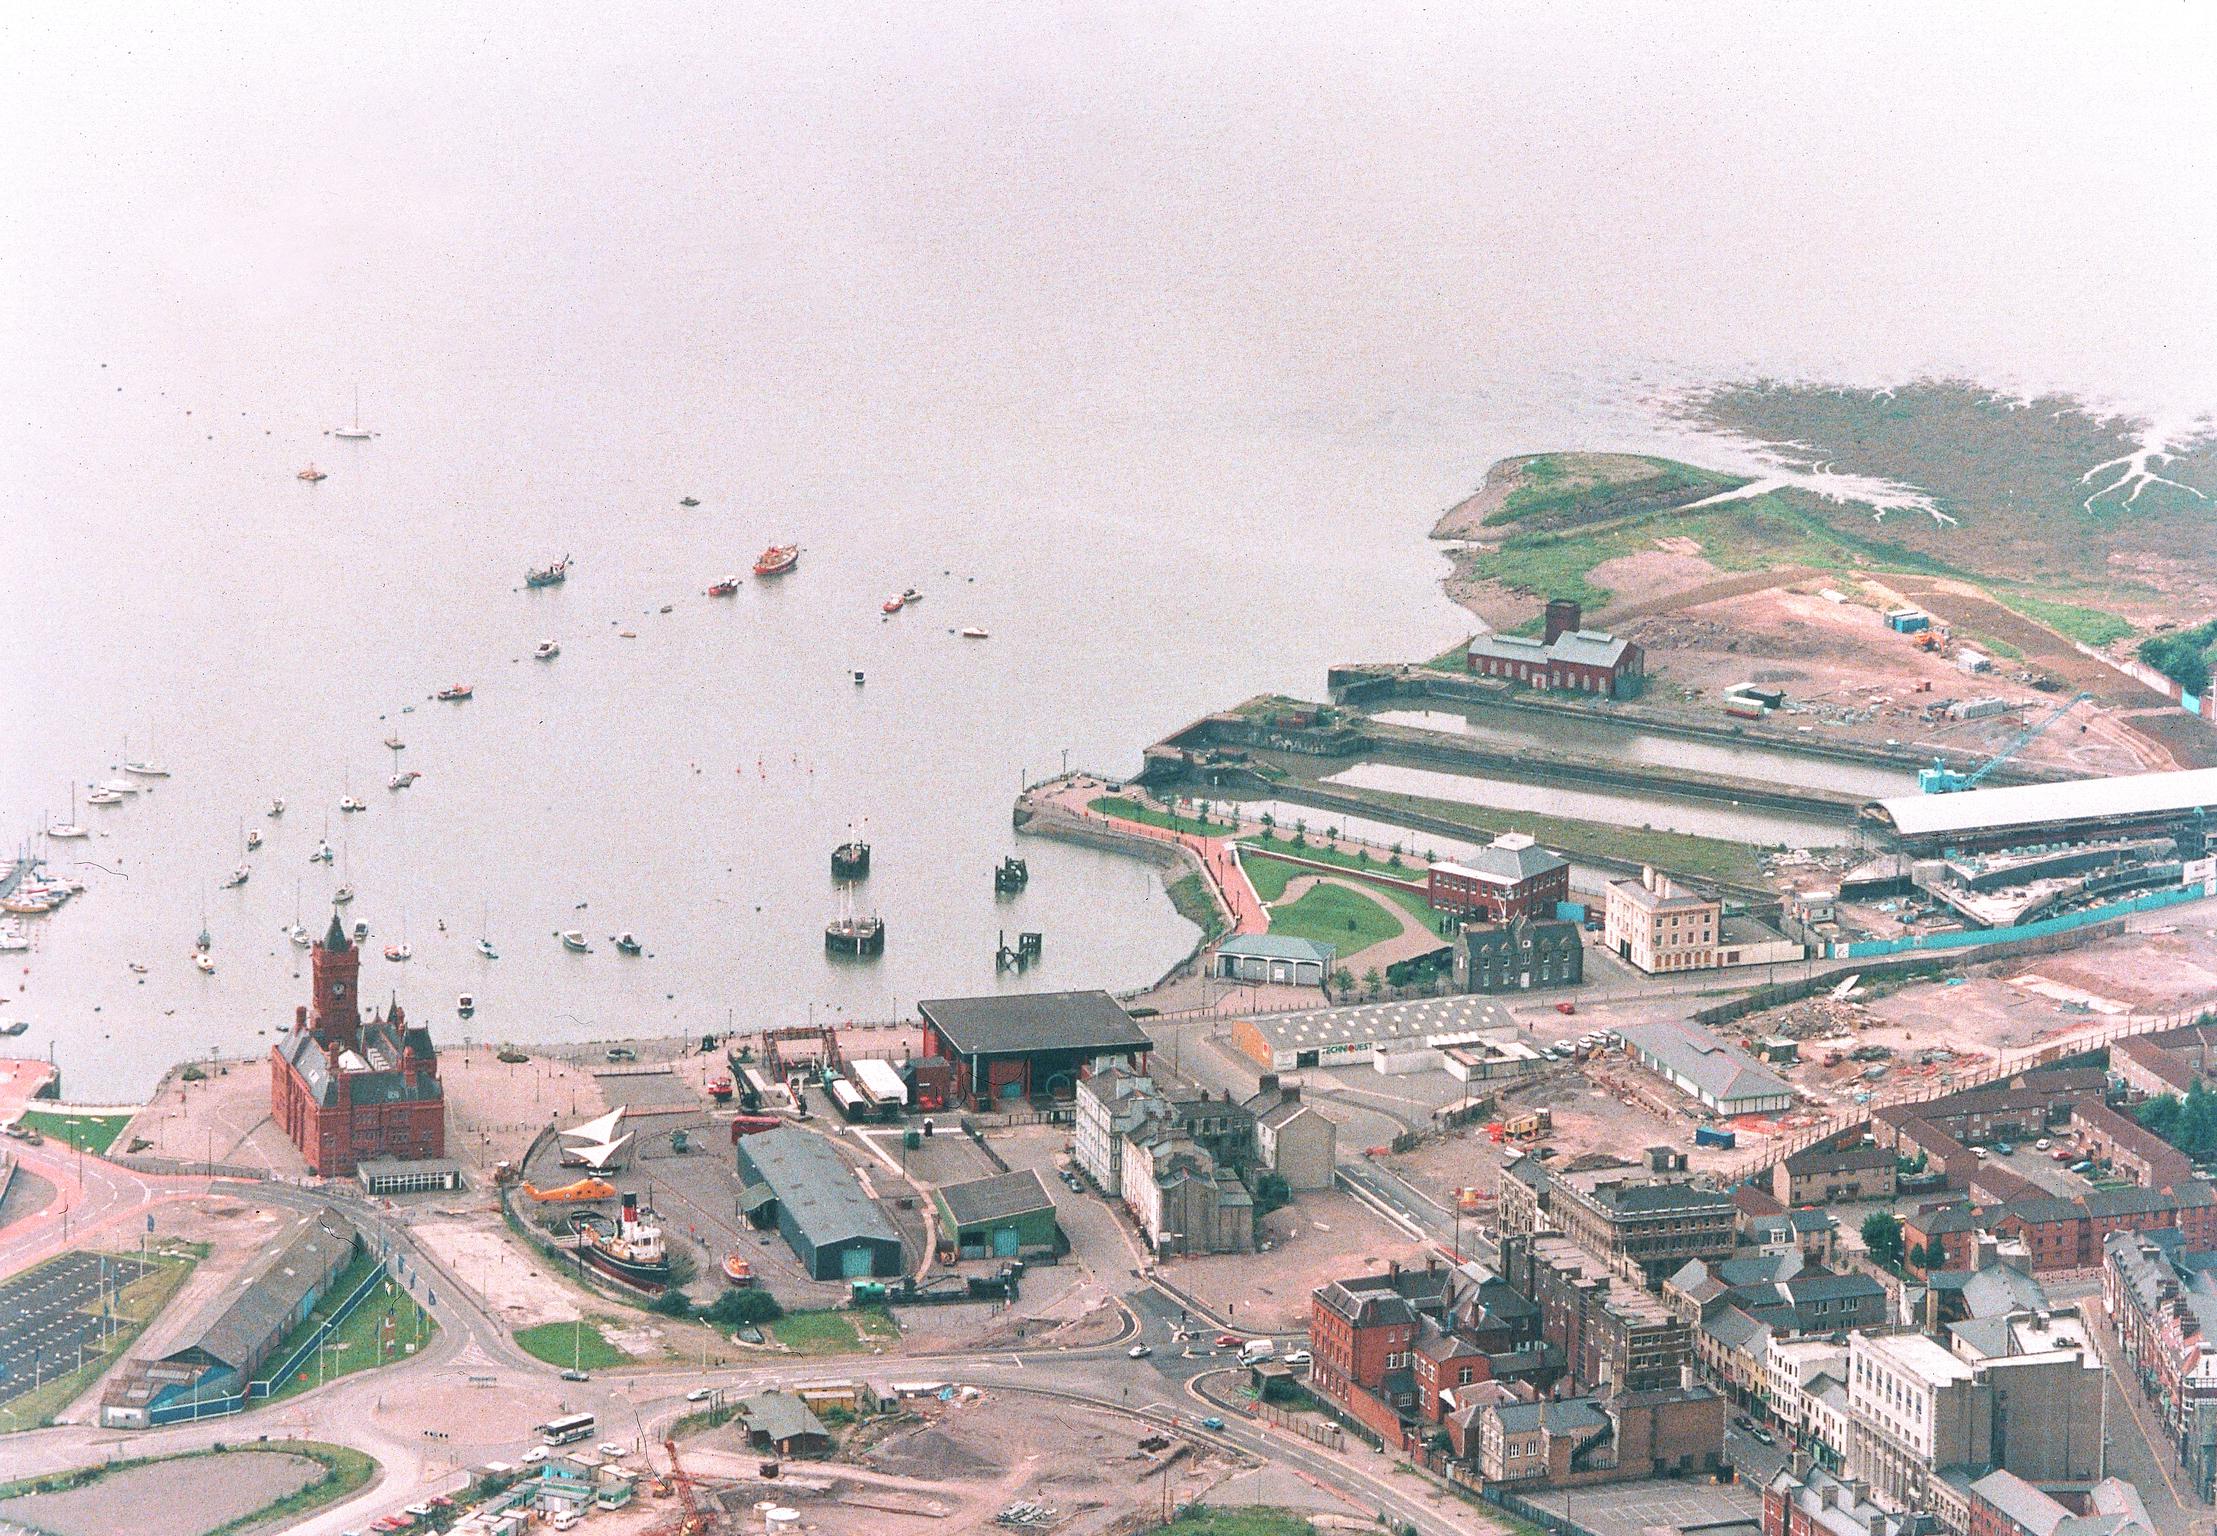 Cardiff Docks, photograph